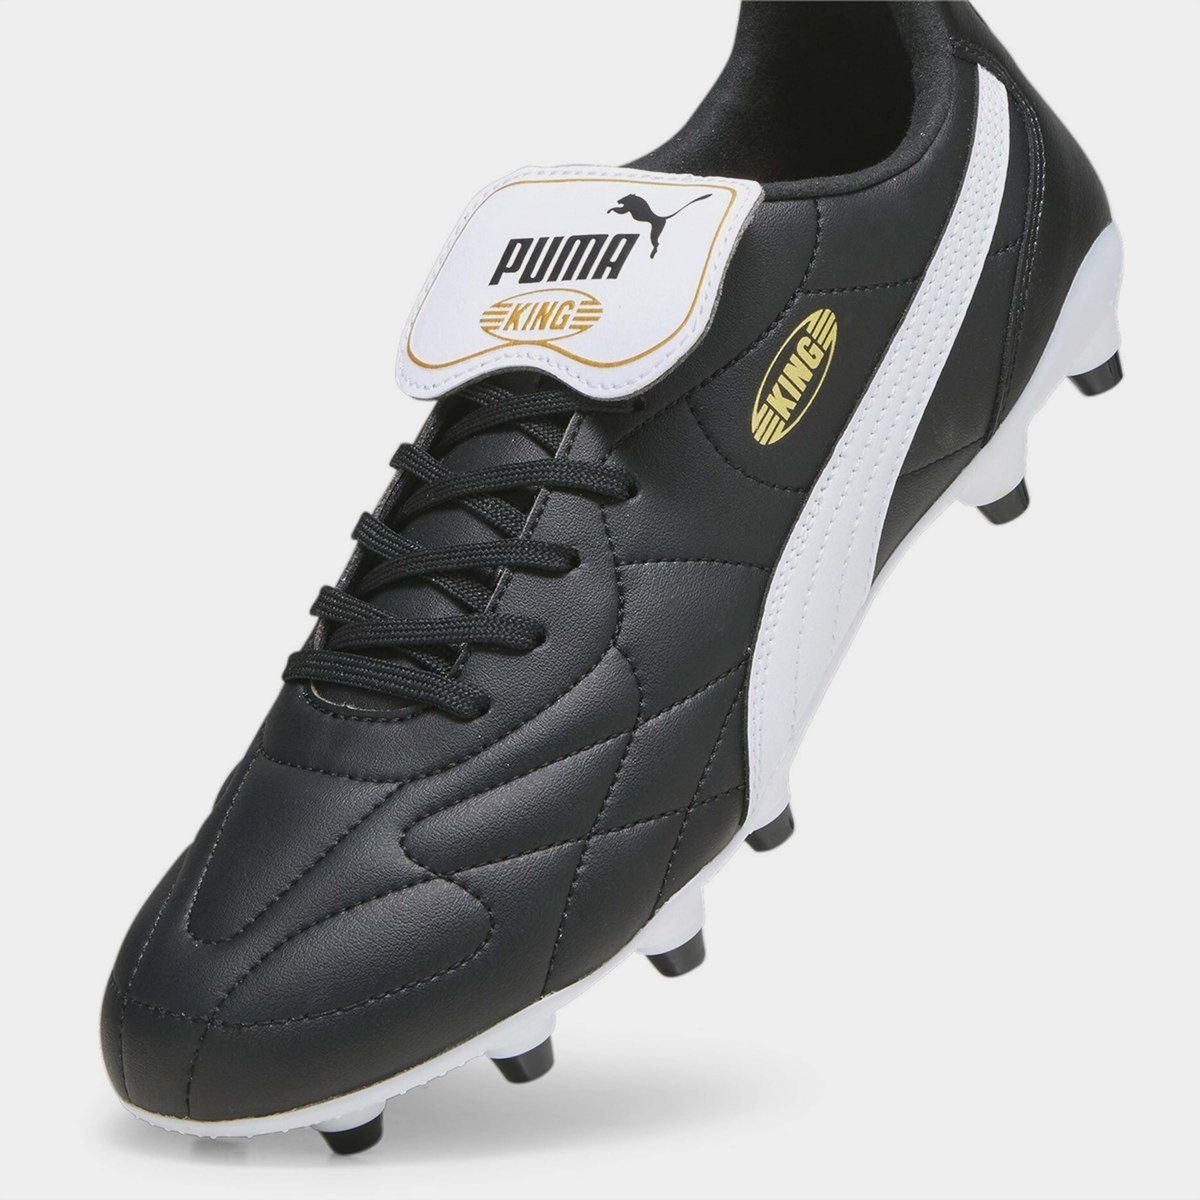 Puma King Top FG Football Boots Black/White, £105.00